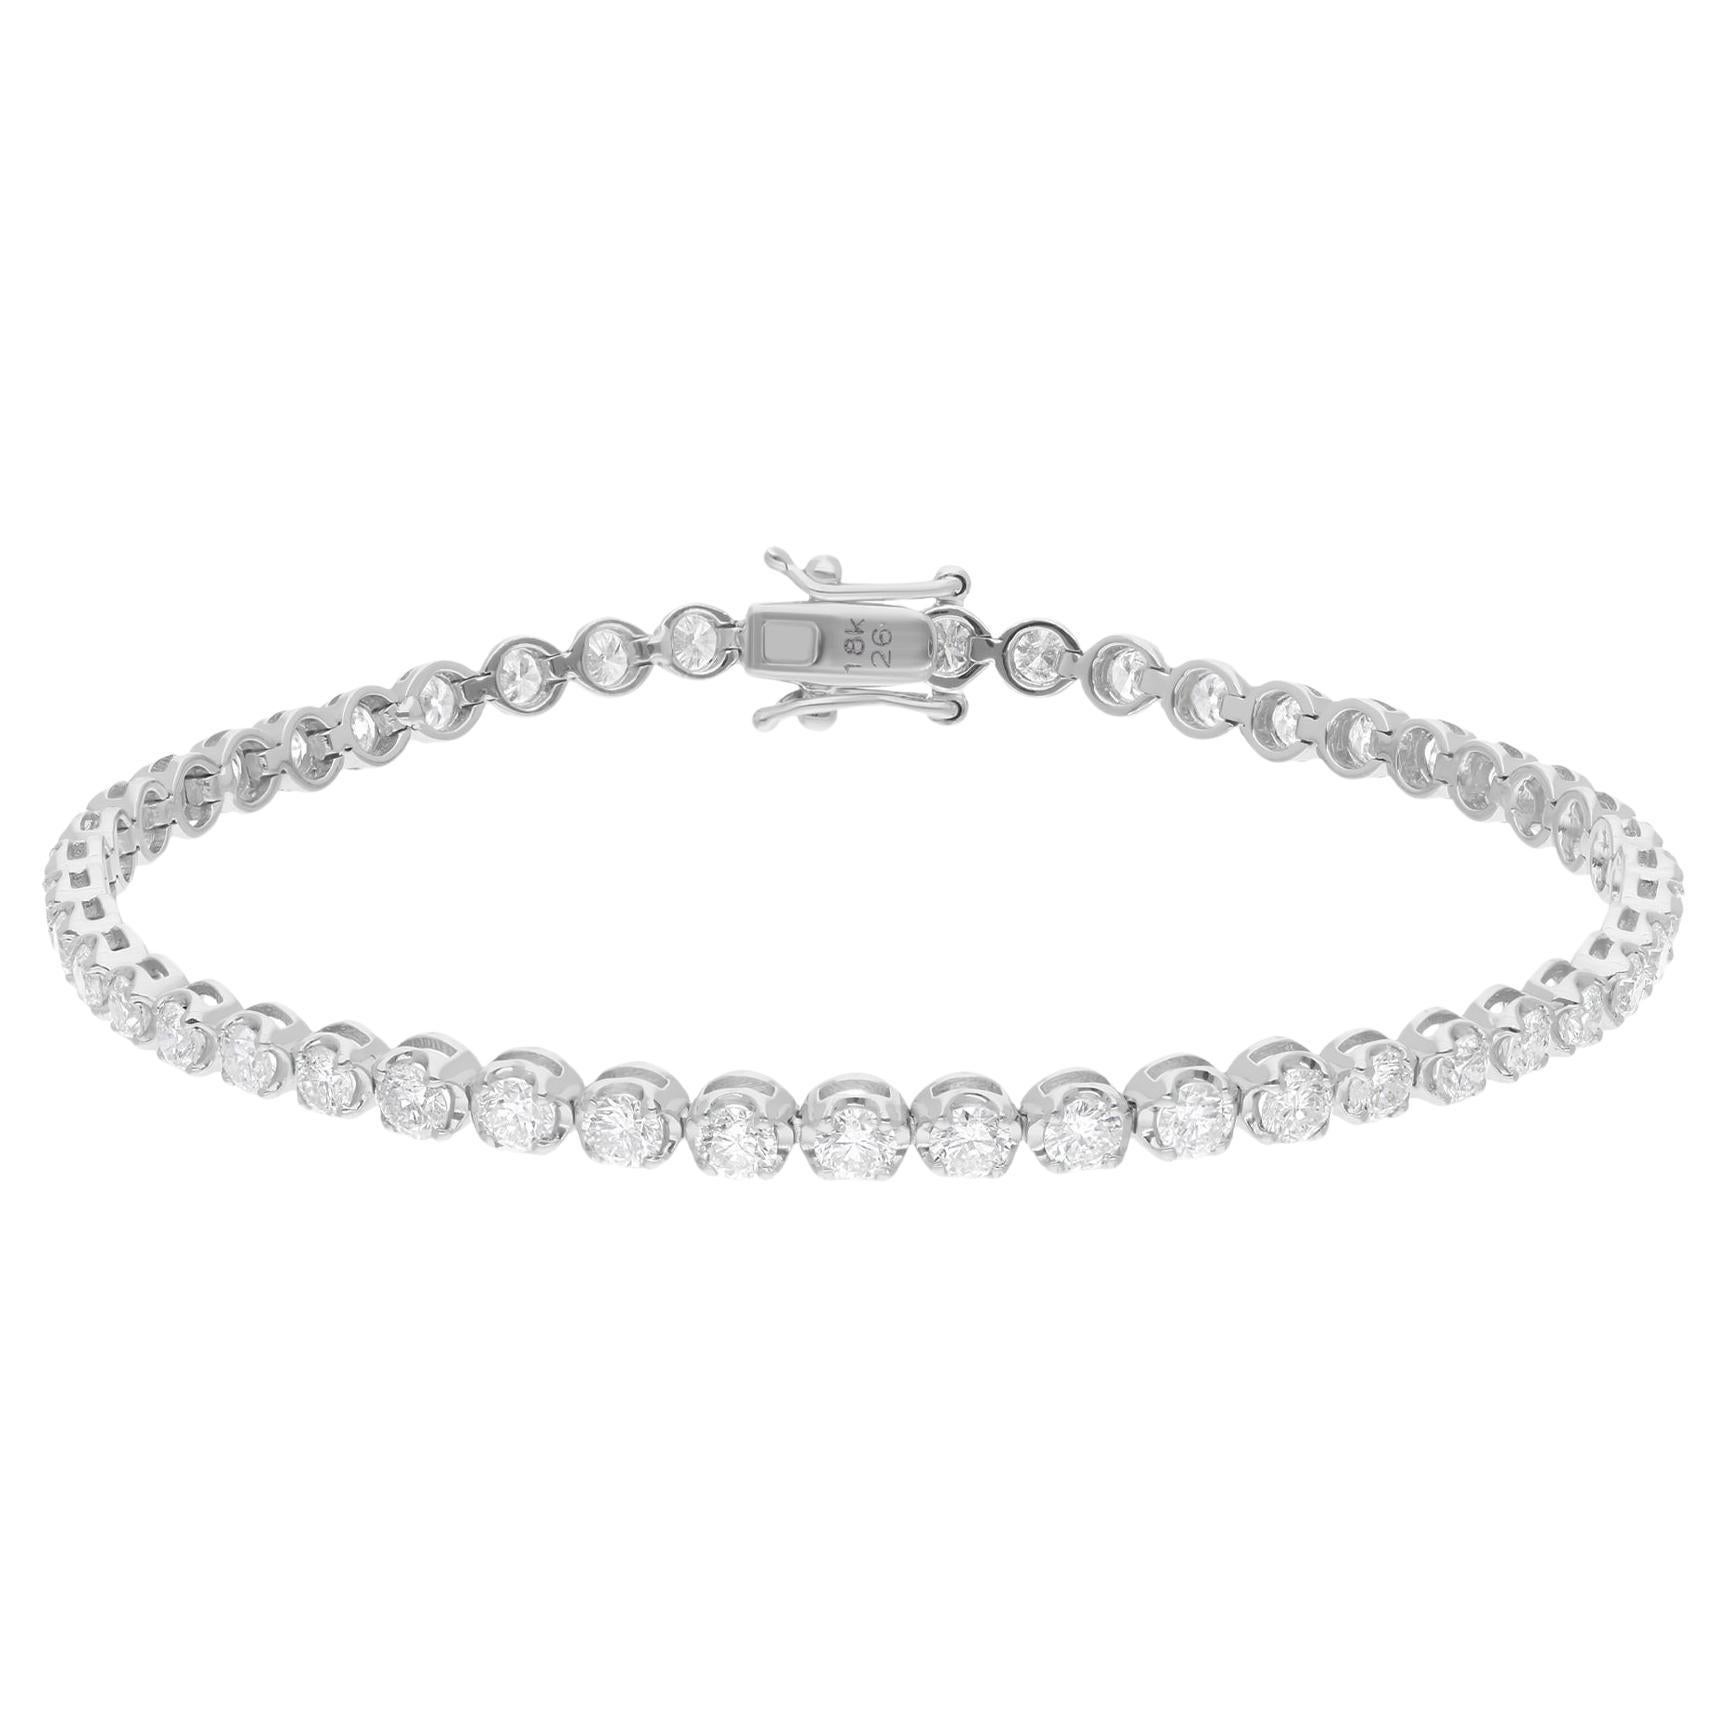 SI Clarity HI Color Round Diamond Tennis Bracelet 18 Karat White Gold Jewelry For Sale